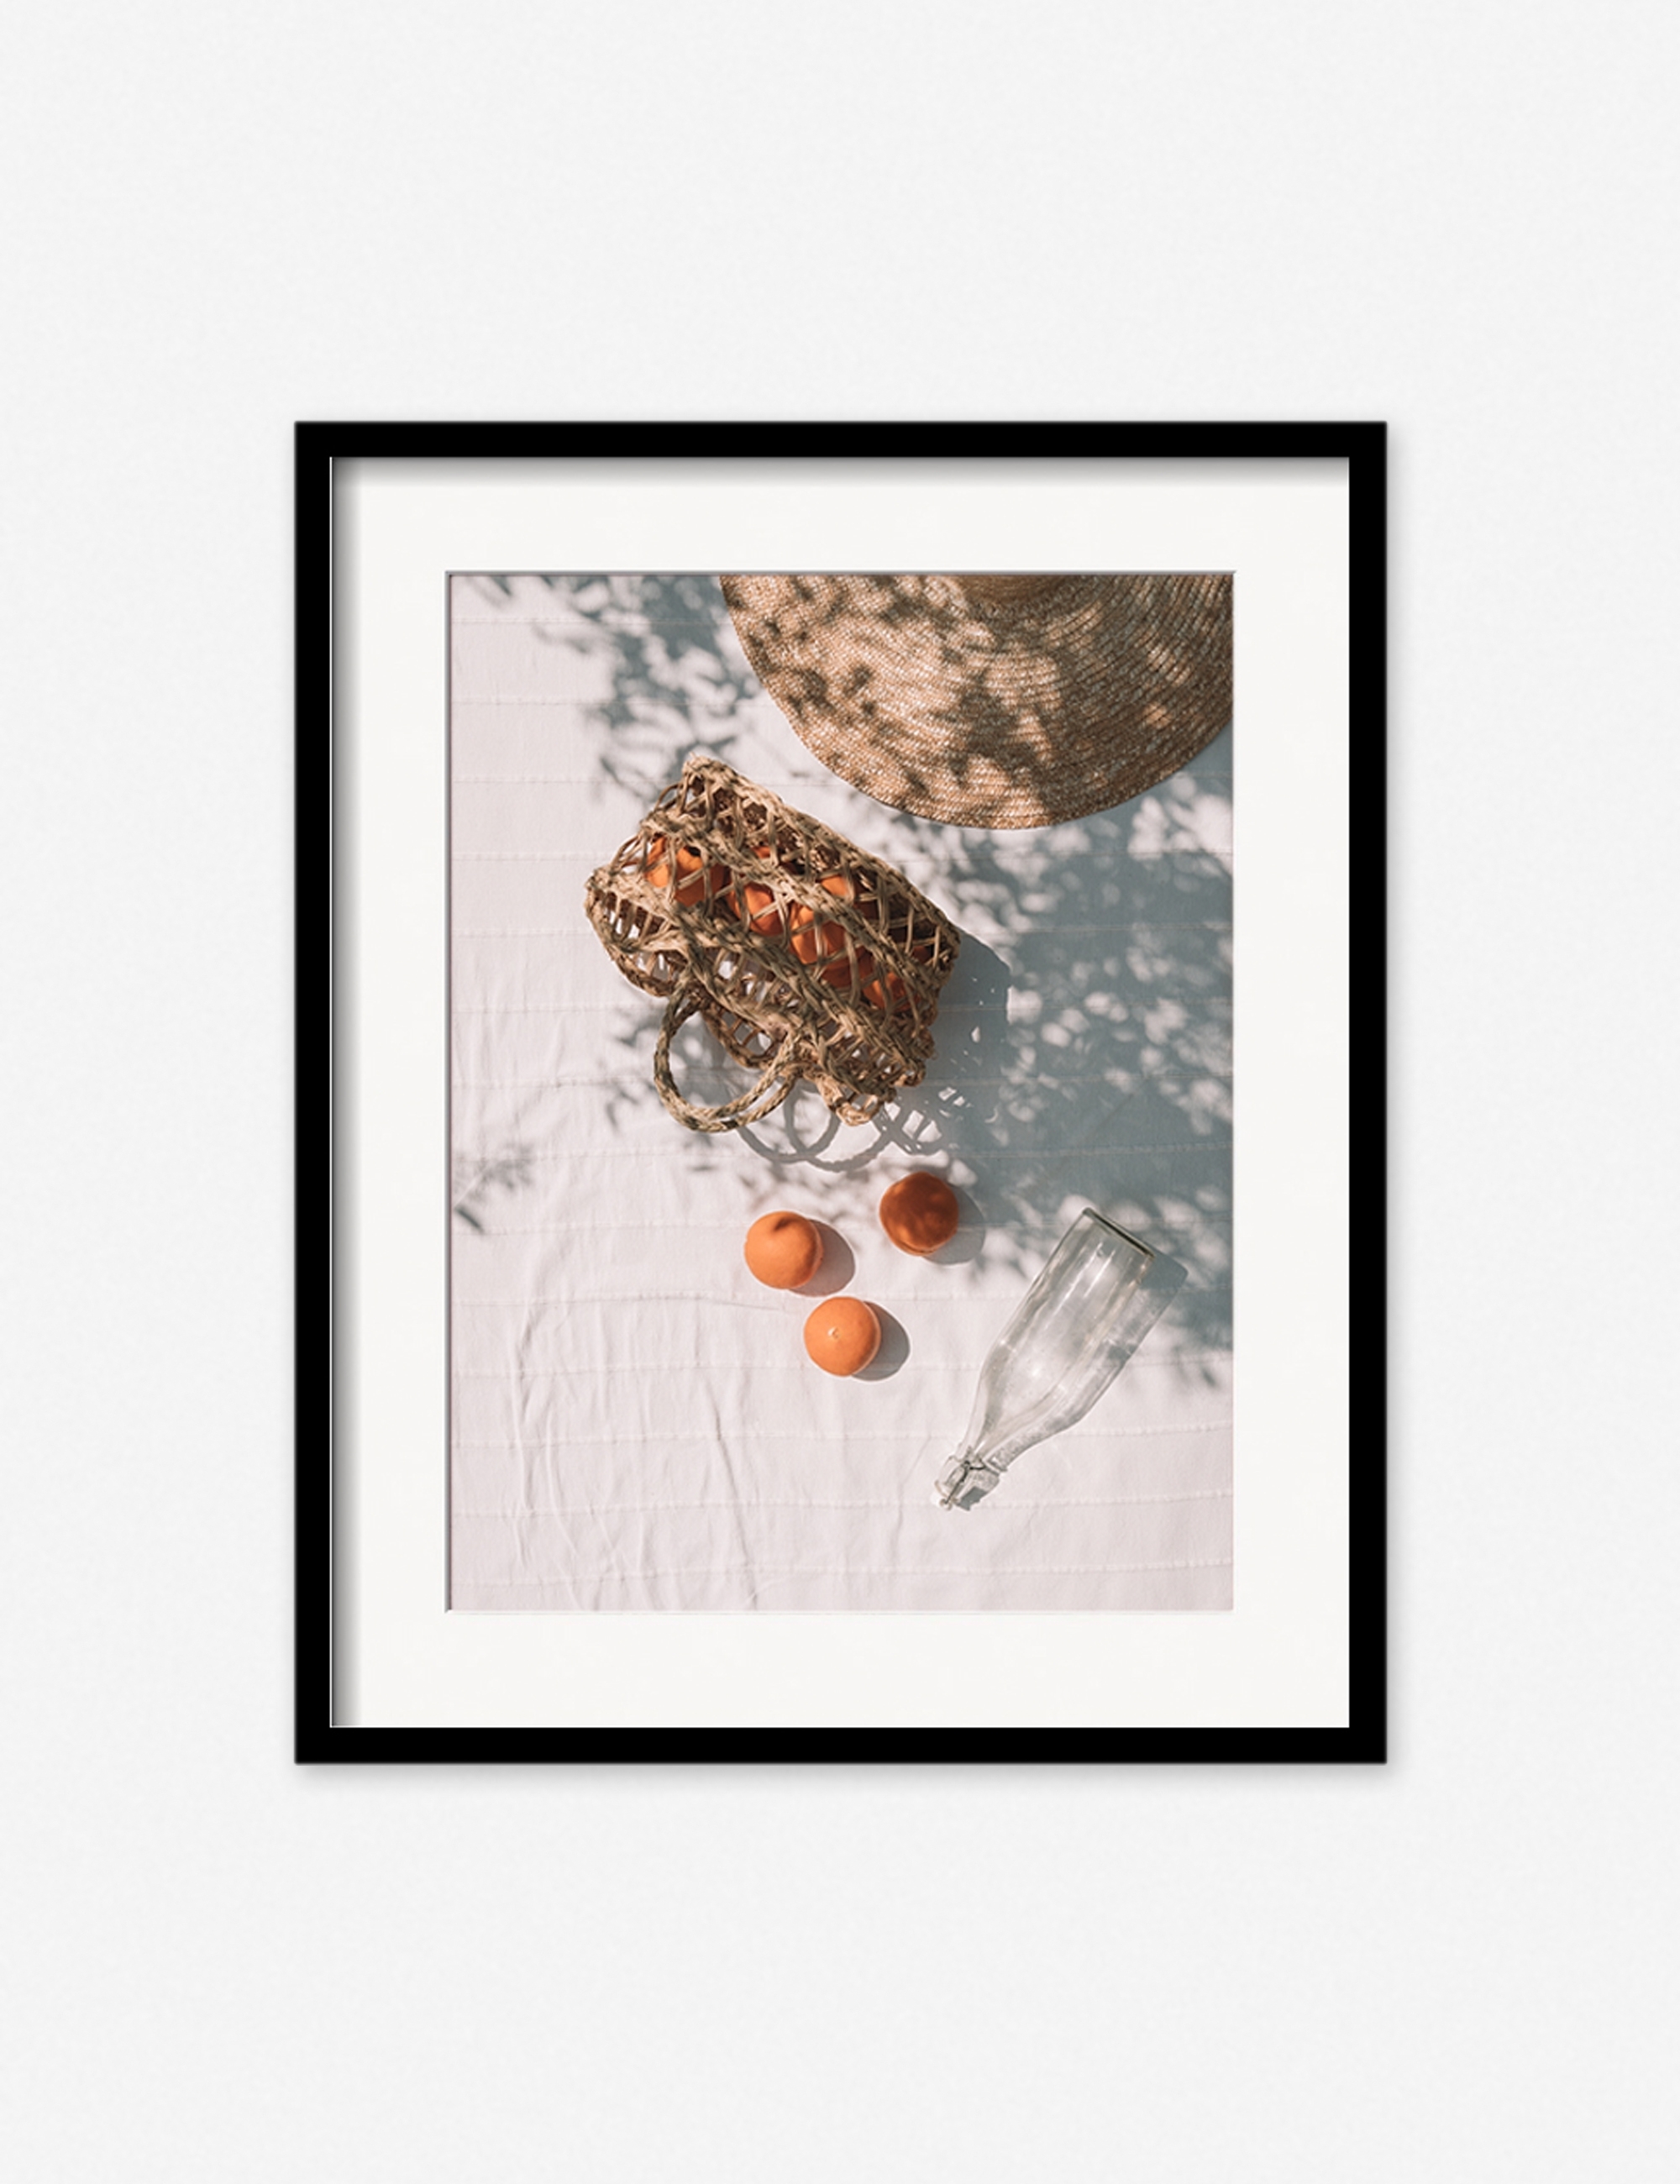 Siesta, By Carley Rudd 30.5" x 36.5" Framed - White - Image 1